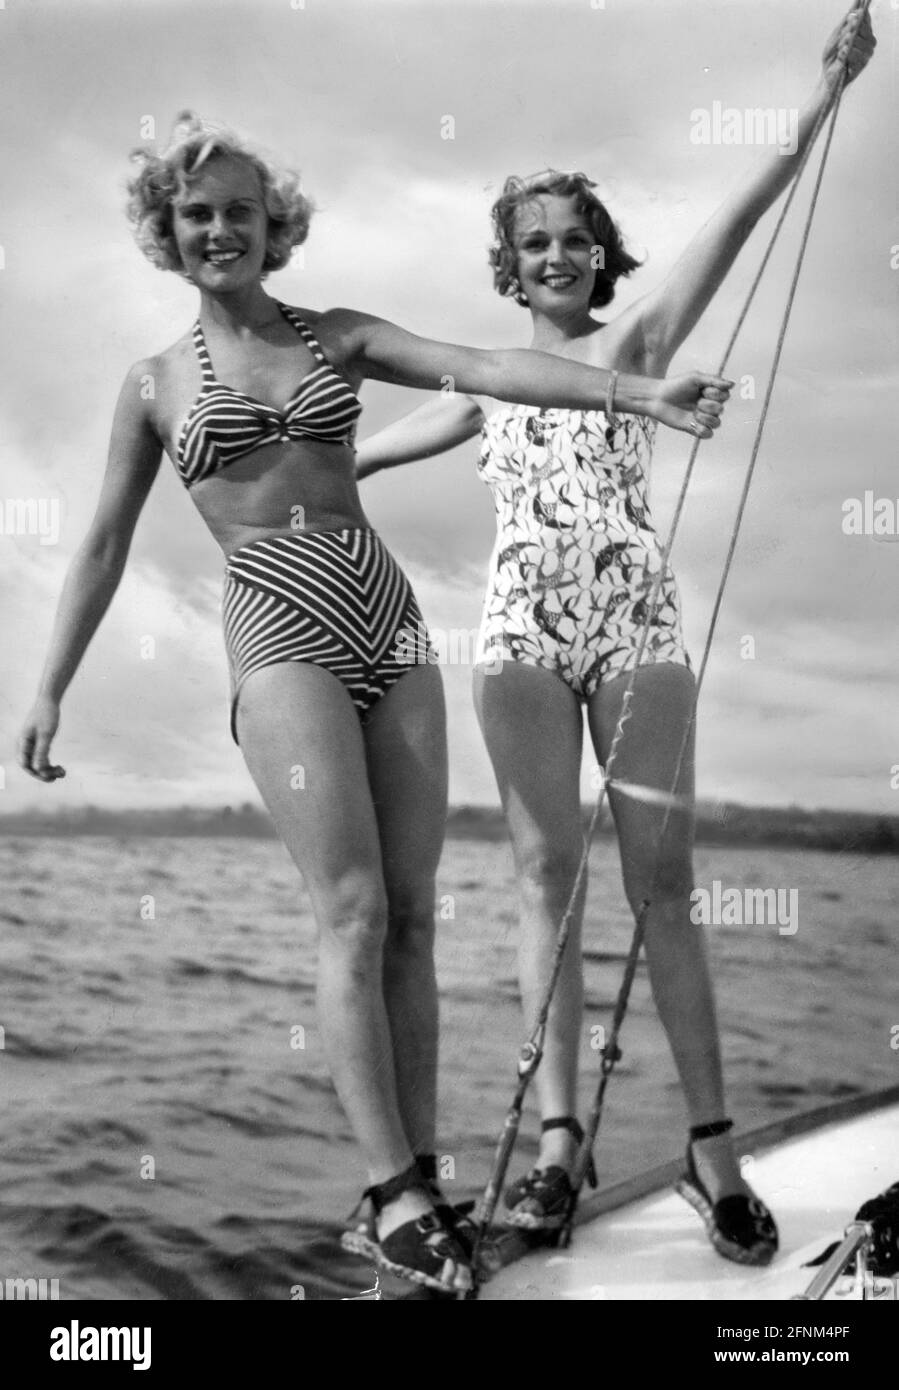 Mode, Modelle, Frau trägt Bikini, Frau trägt Badeanzug, volle Länge, Yacht,  1950er, 50er Jahre, ADDITIONAL-RIGHTS-CLEARANCE-INFO-NOT-AVAILABLE  Stockfotografie - Alamy